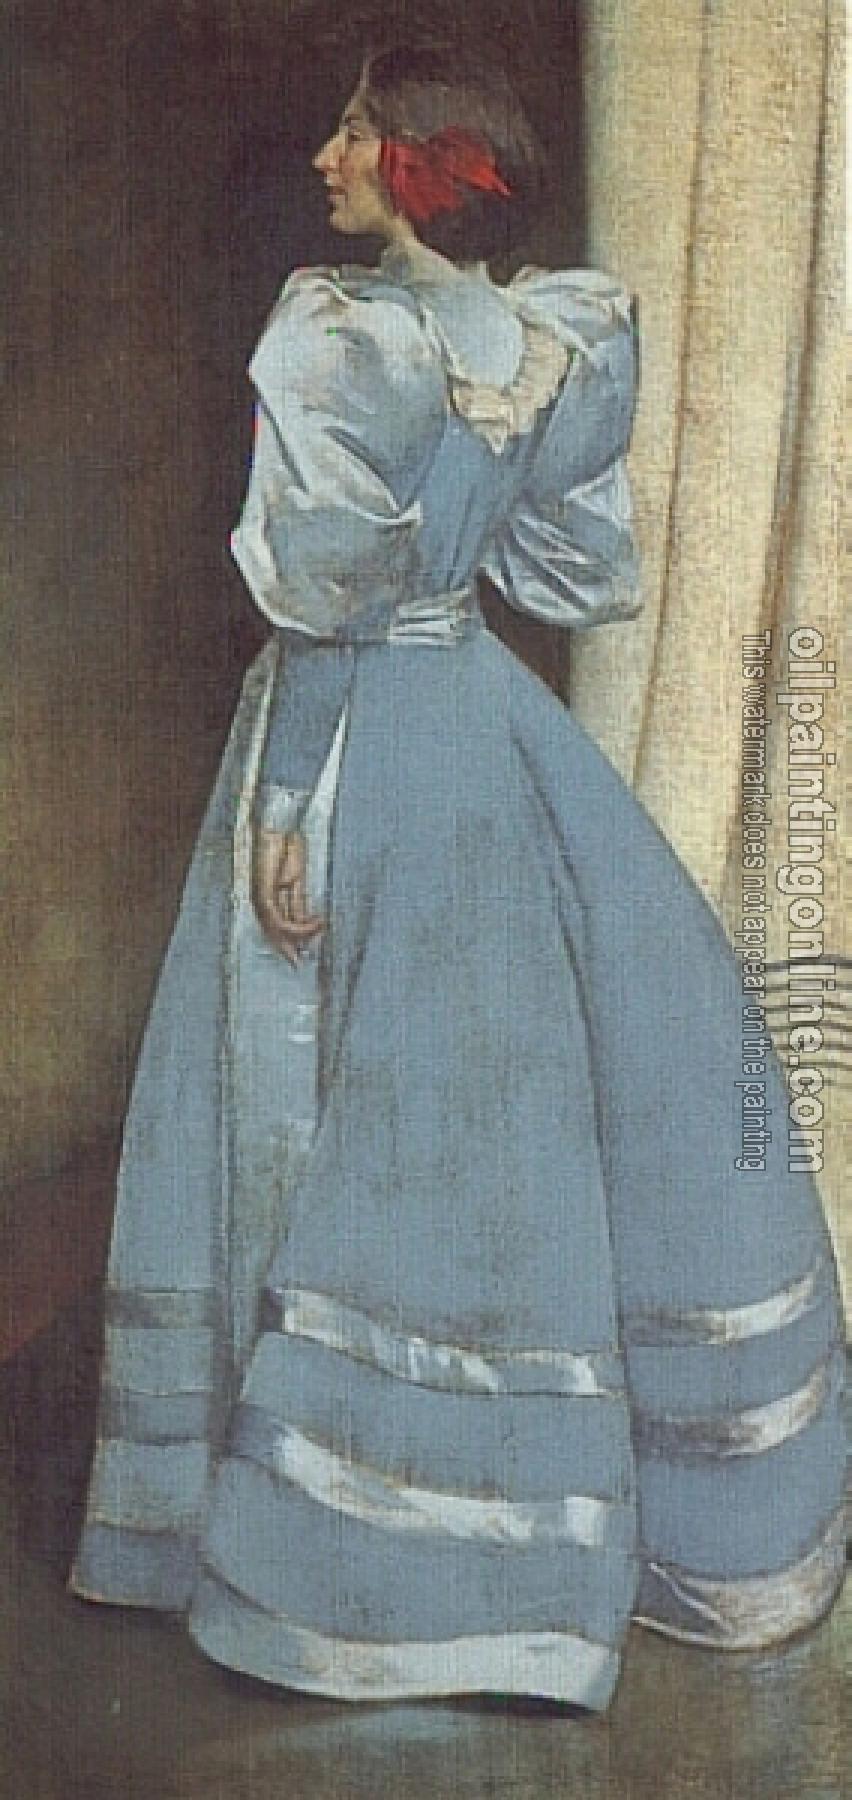 Alexander, John White - Gray Portrait, The Lady in Gray